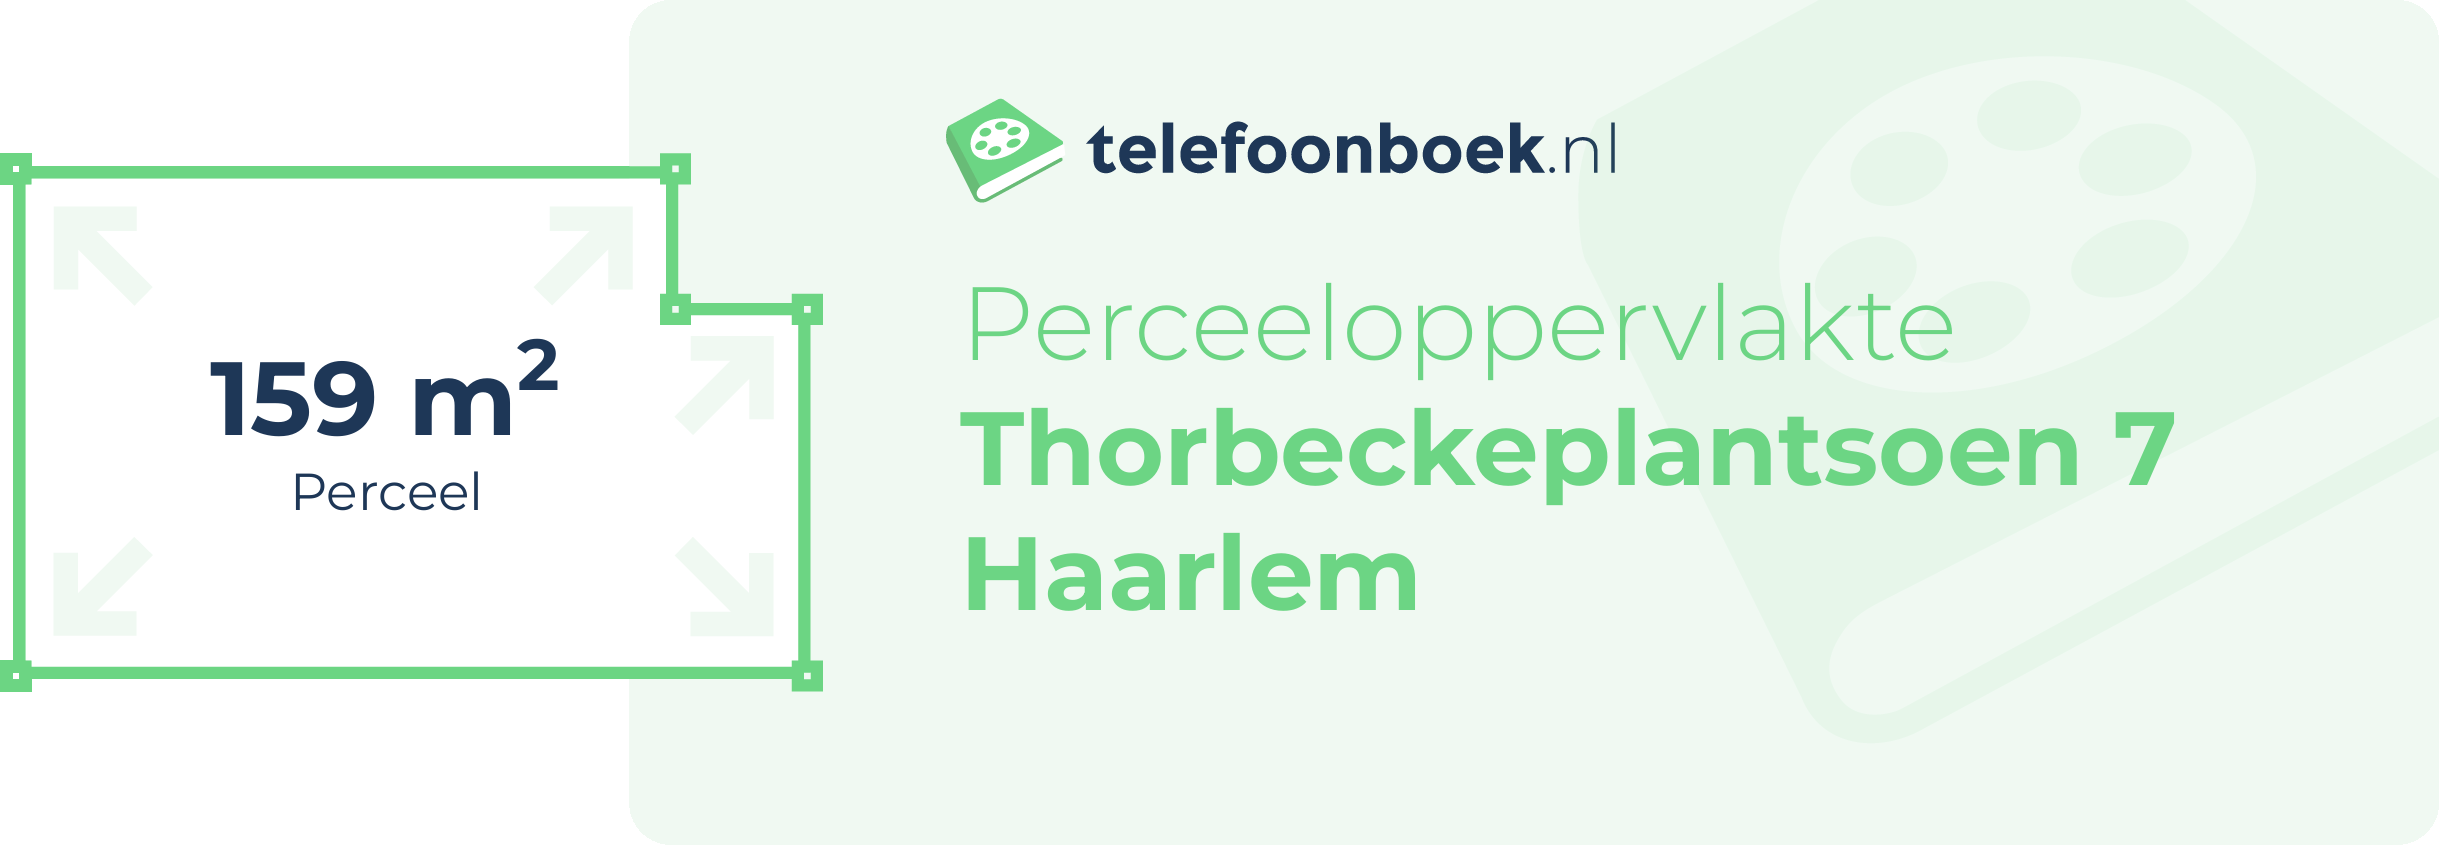 Perceeloppervlakte Thorbeckeplantsoen 7 Haarlem